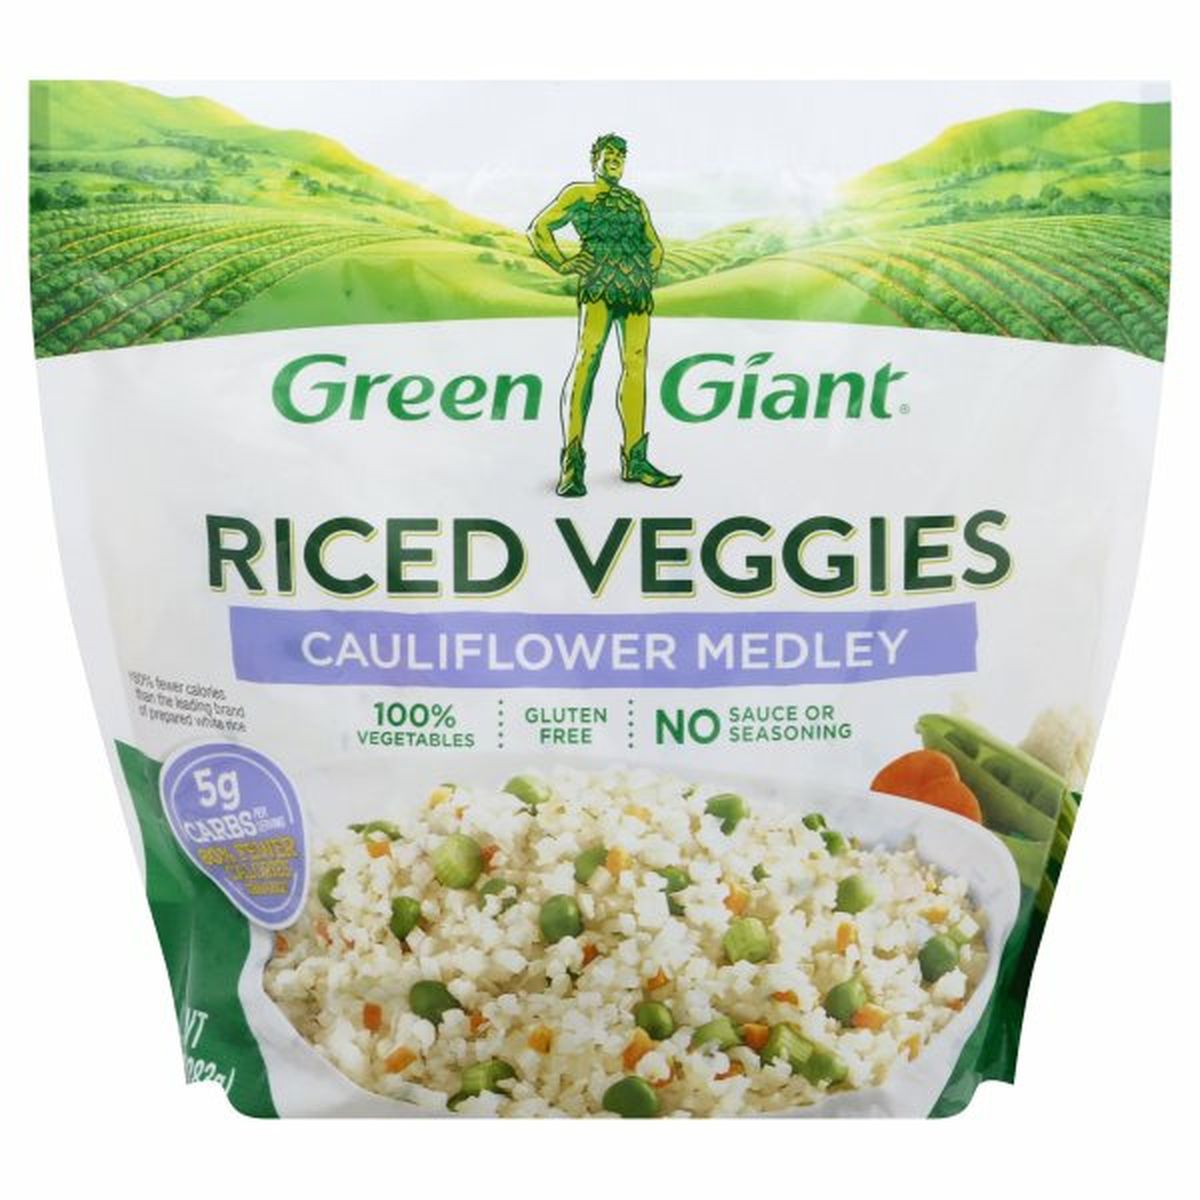 Calories in Green Giant Riced Veggies, Cauliflower Medley